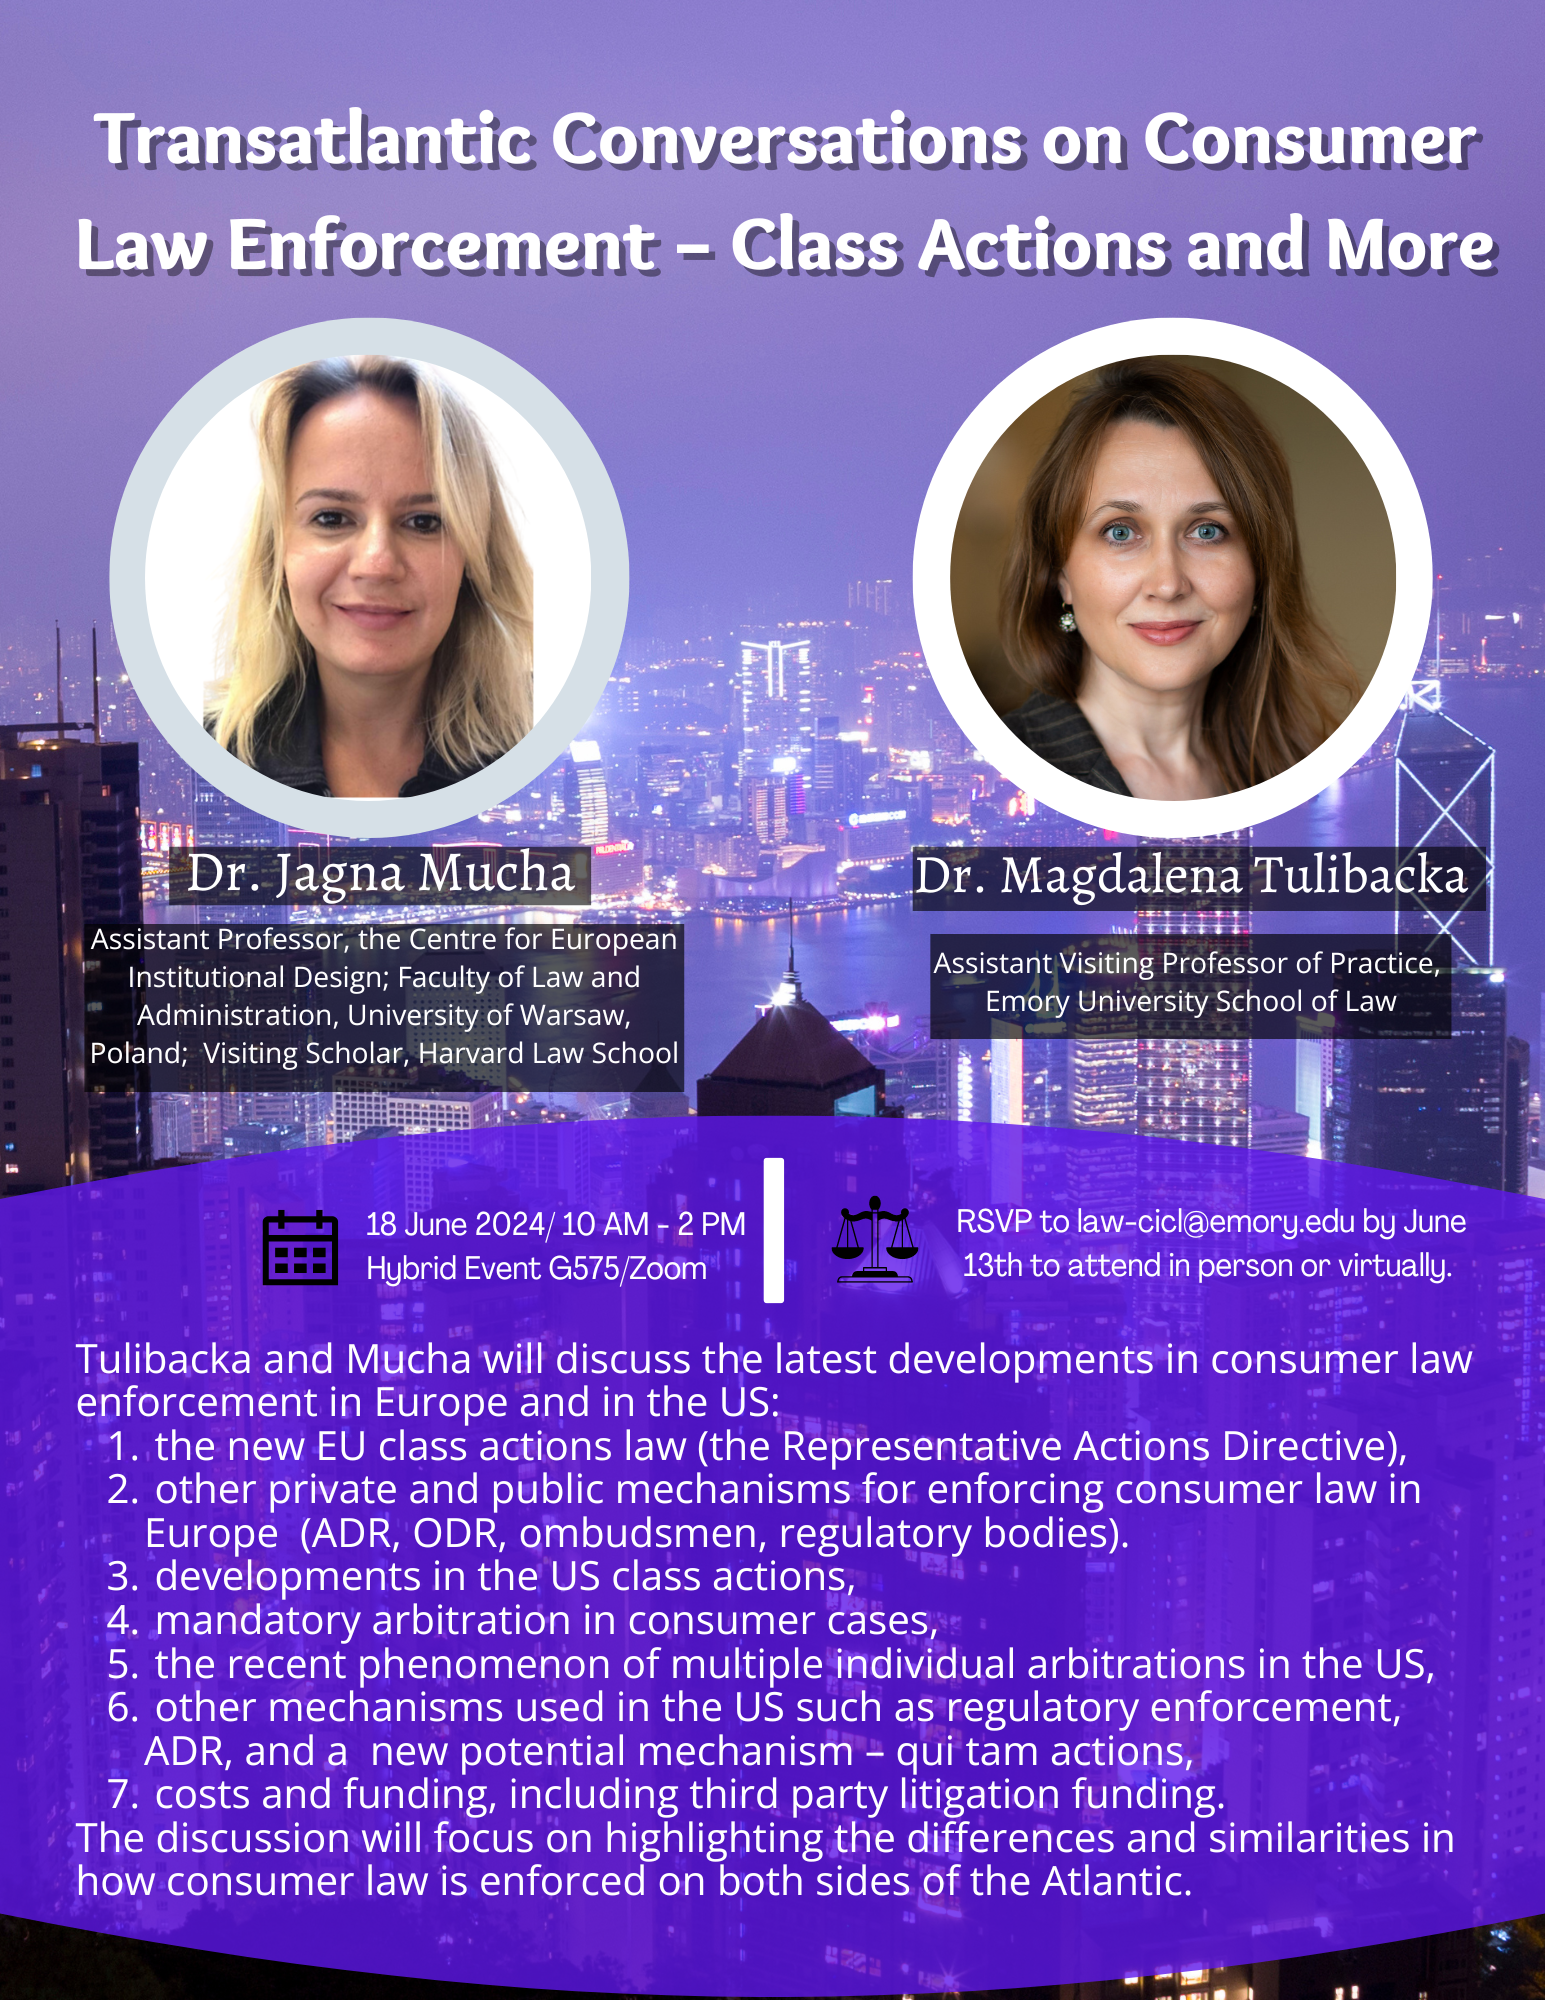 ransatlantic Conversations on Consumer Law Enforcement - Class Actions and More